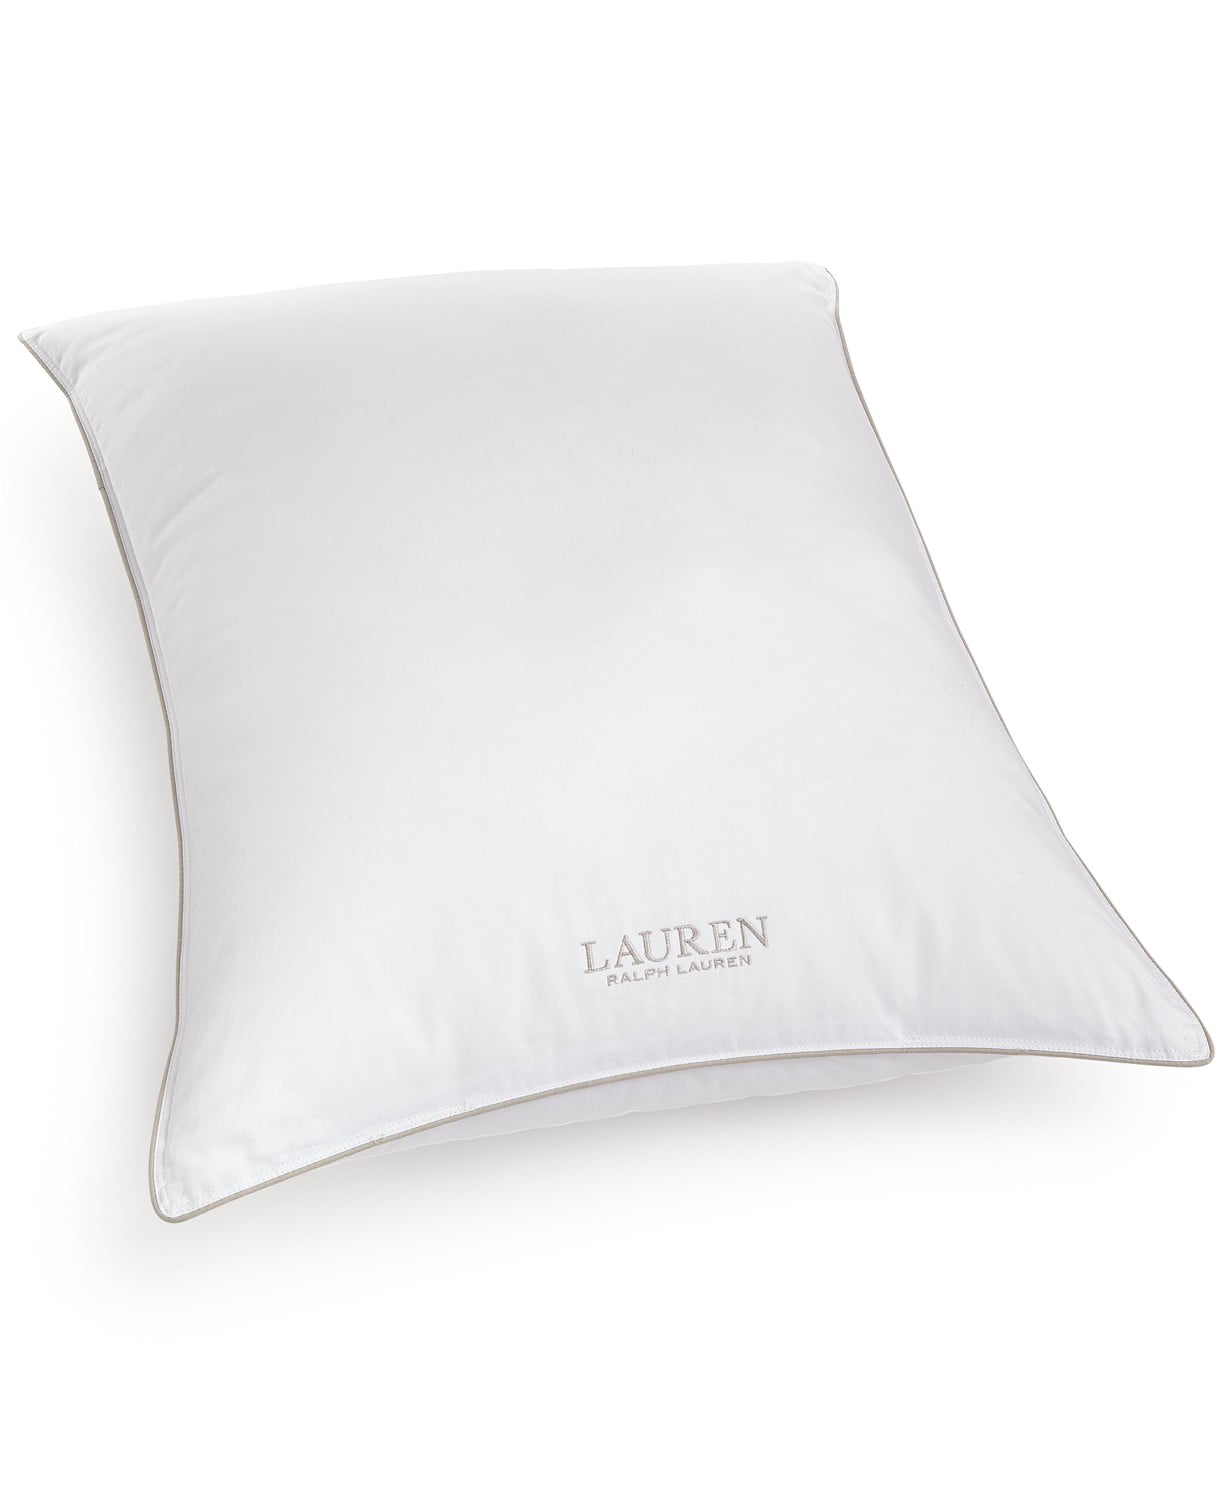 Ralph Lauren Lux-Loft Firm Density Down Alternative Pillow, Certified  Asthma and Allergy Friendly, King, White 